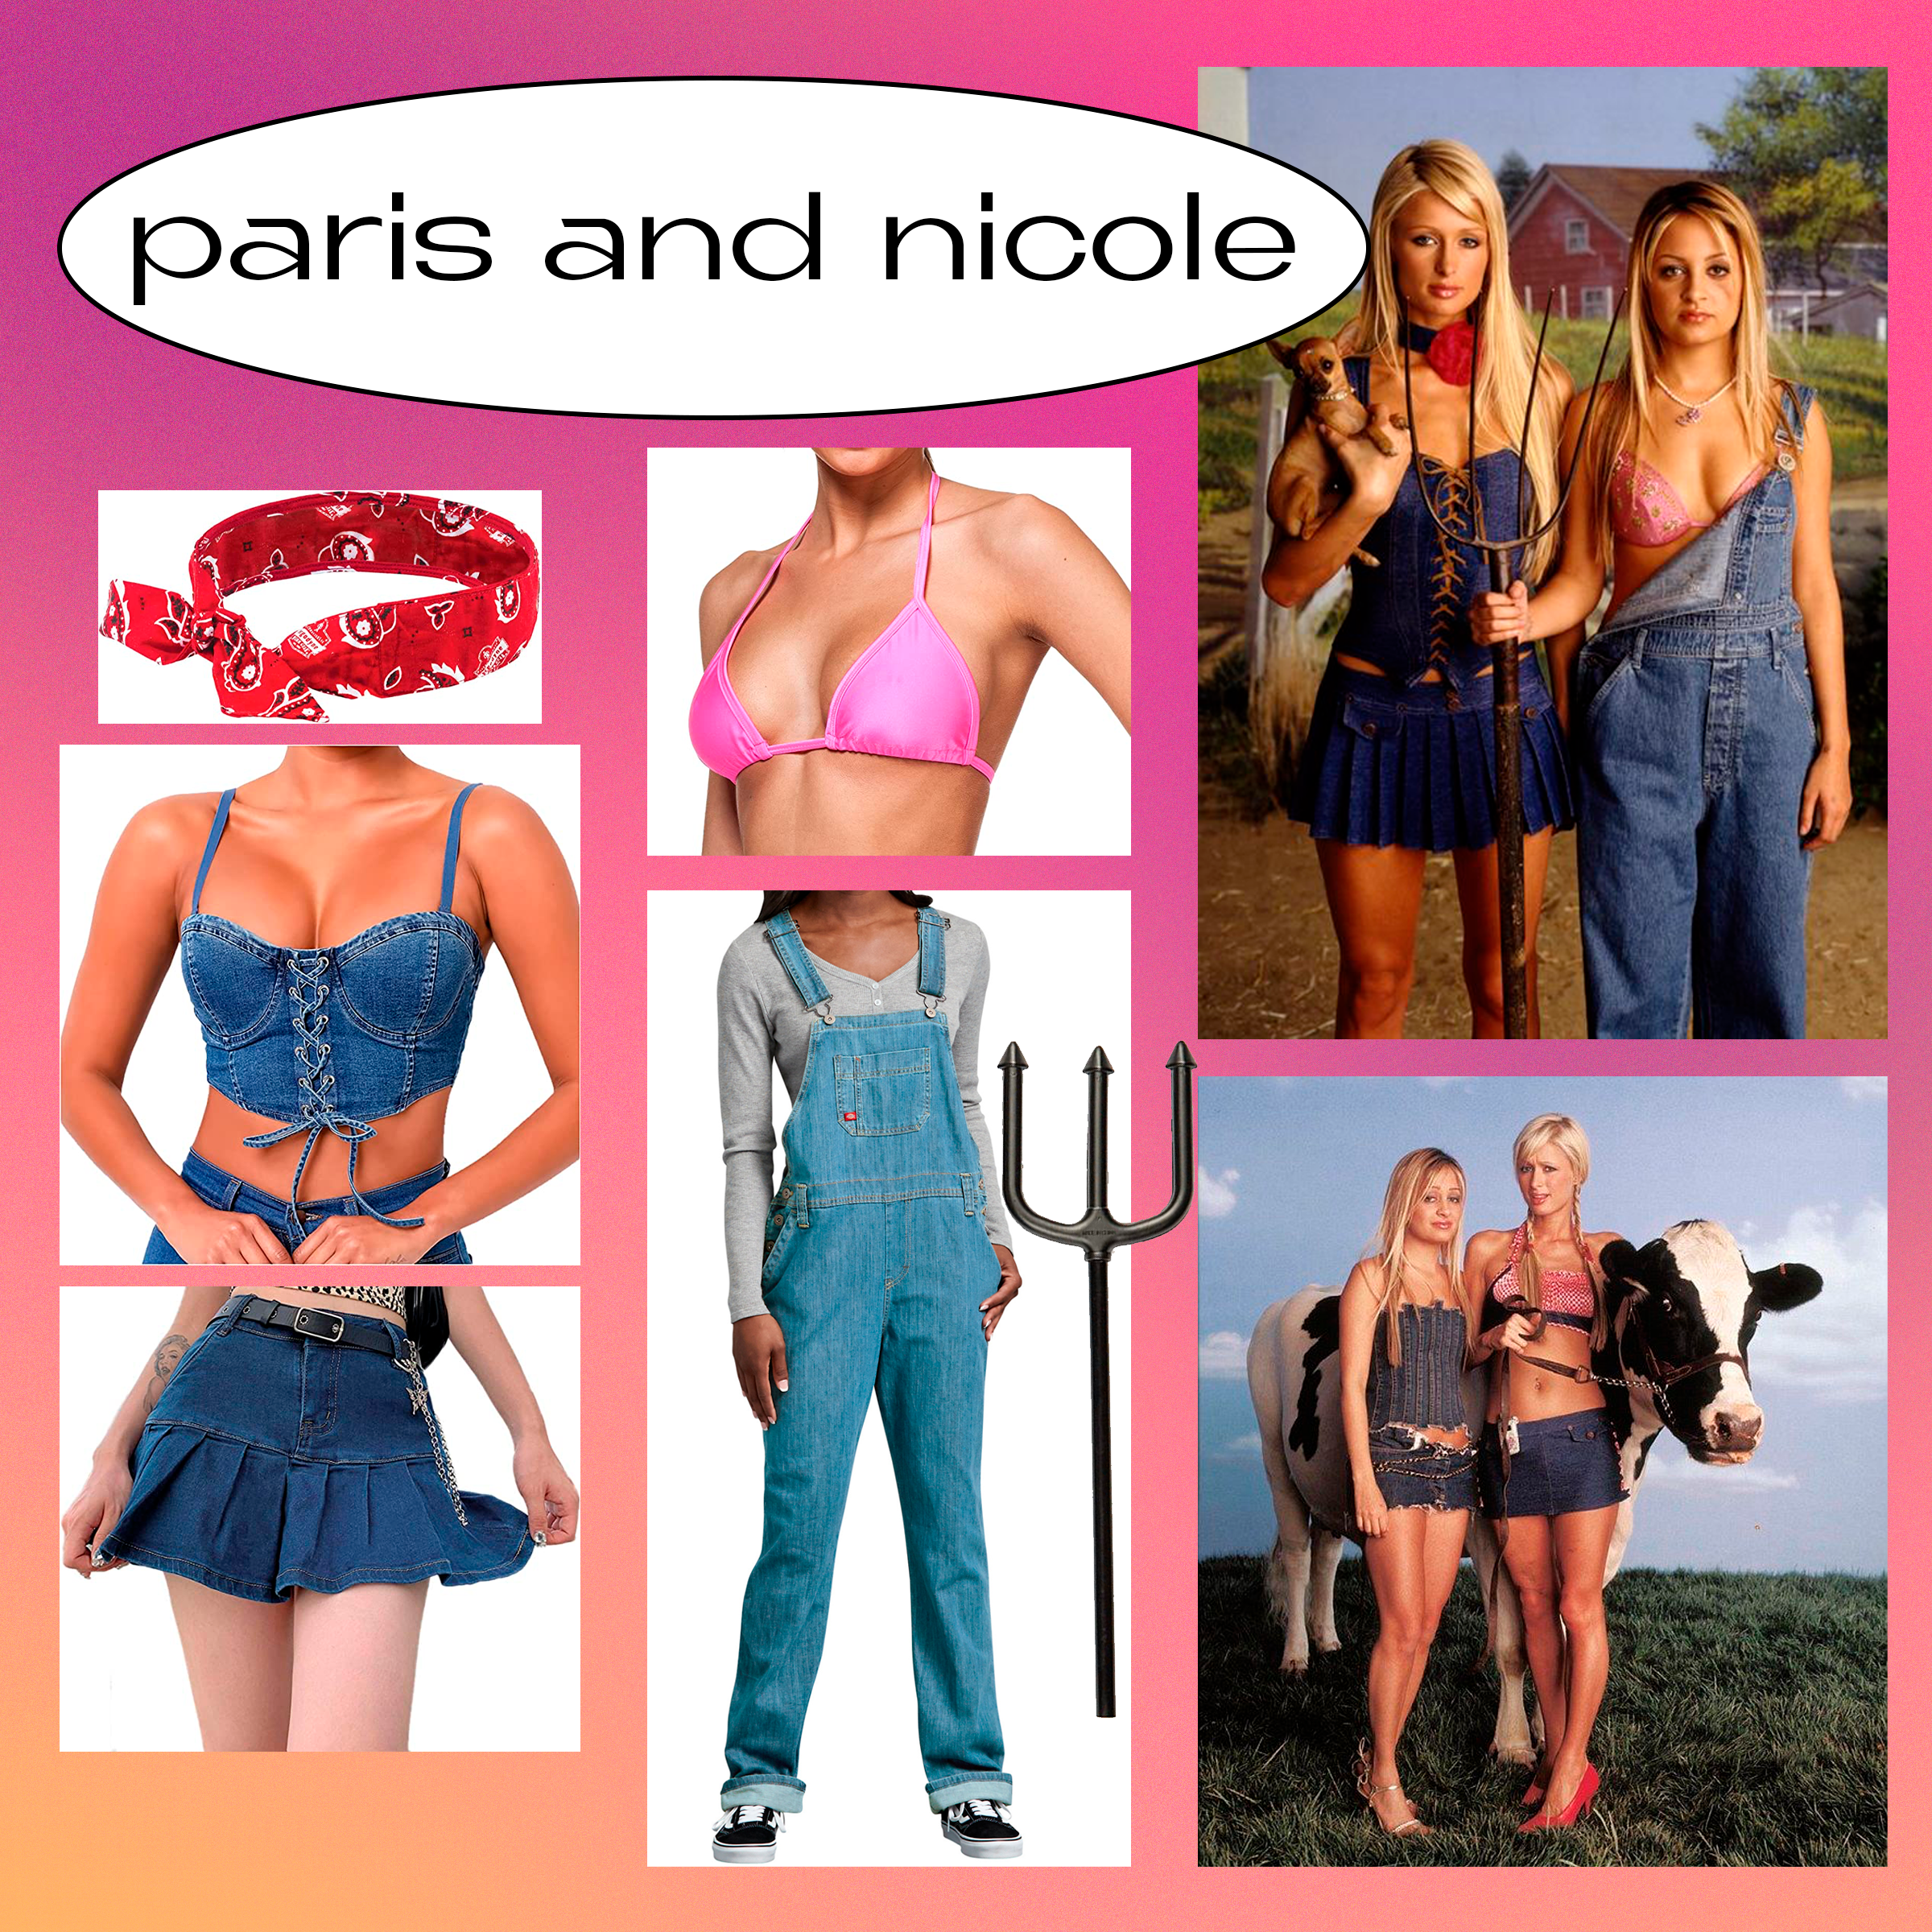 Paris Hilton and Nicole Richie - The Simple Life (2003)